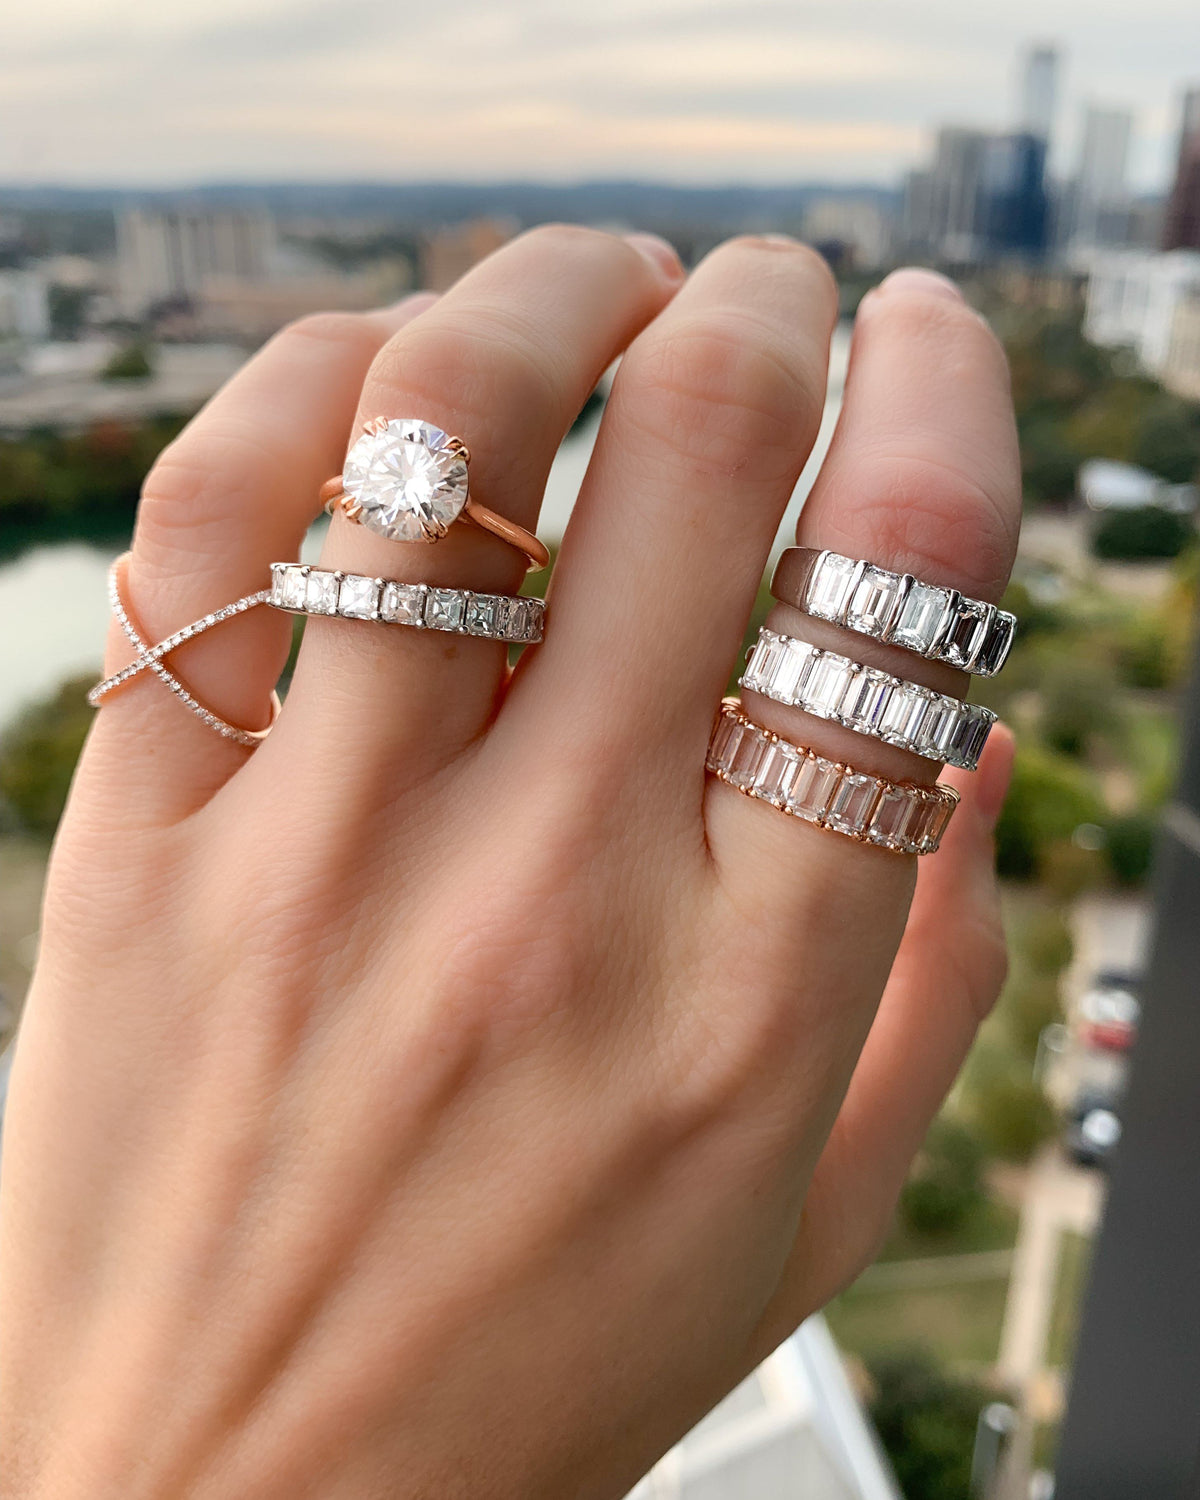 Sybil: Classic Emerald Cut Diamond Engagement Ring | Ken & Dana Design